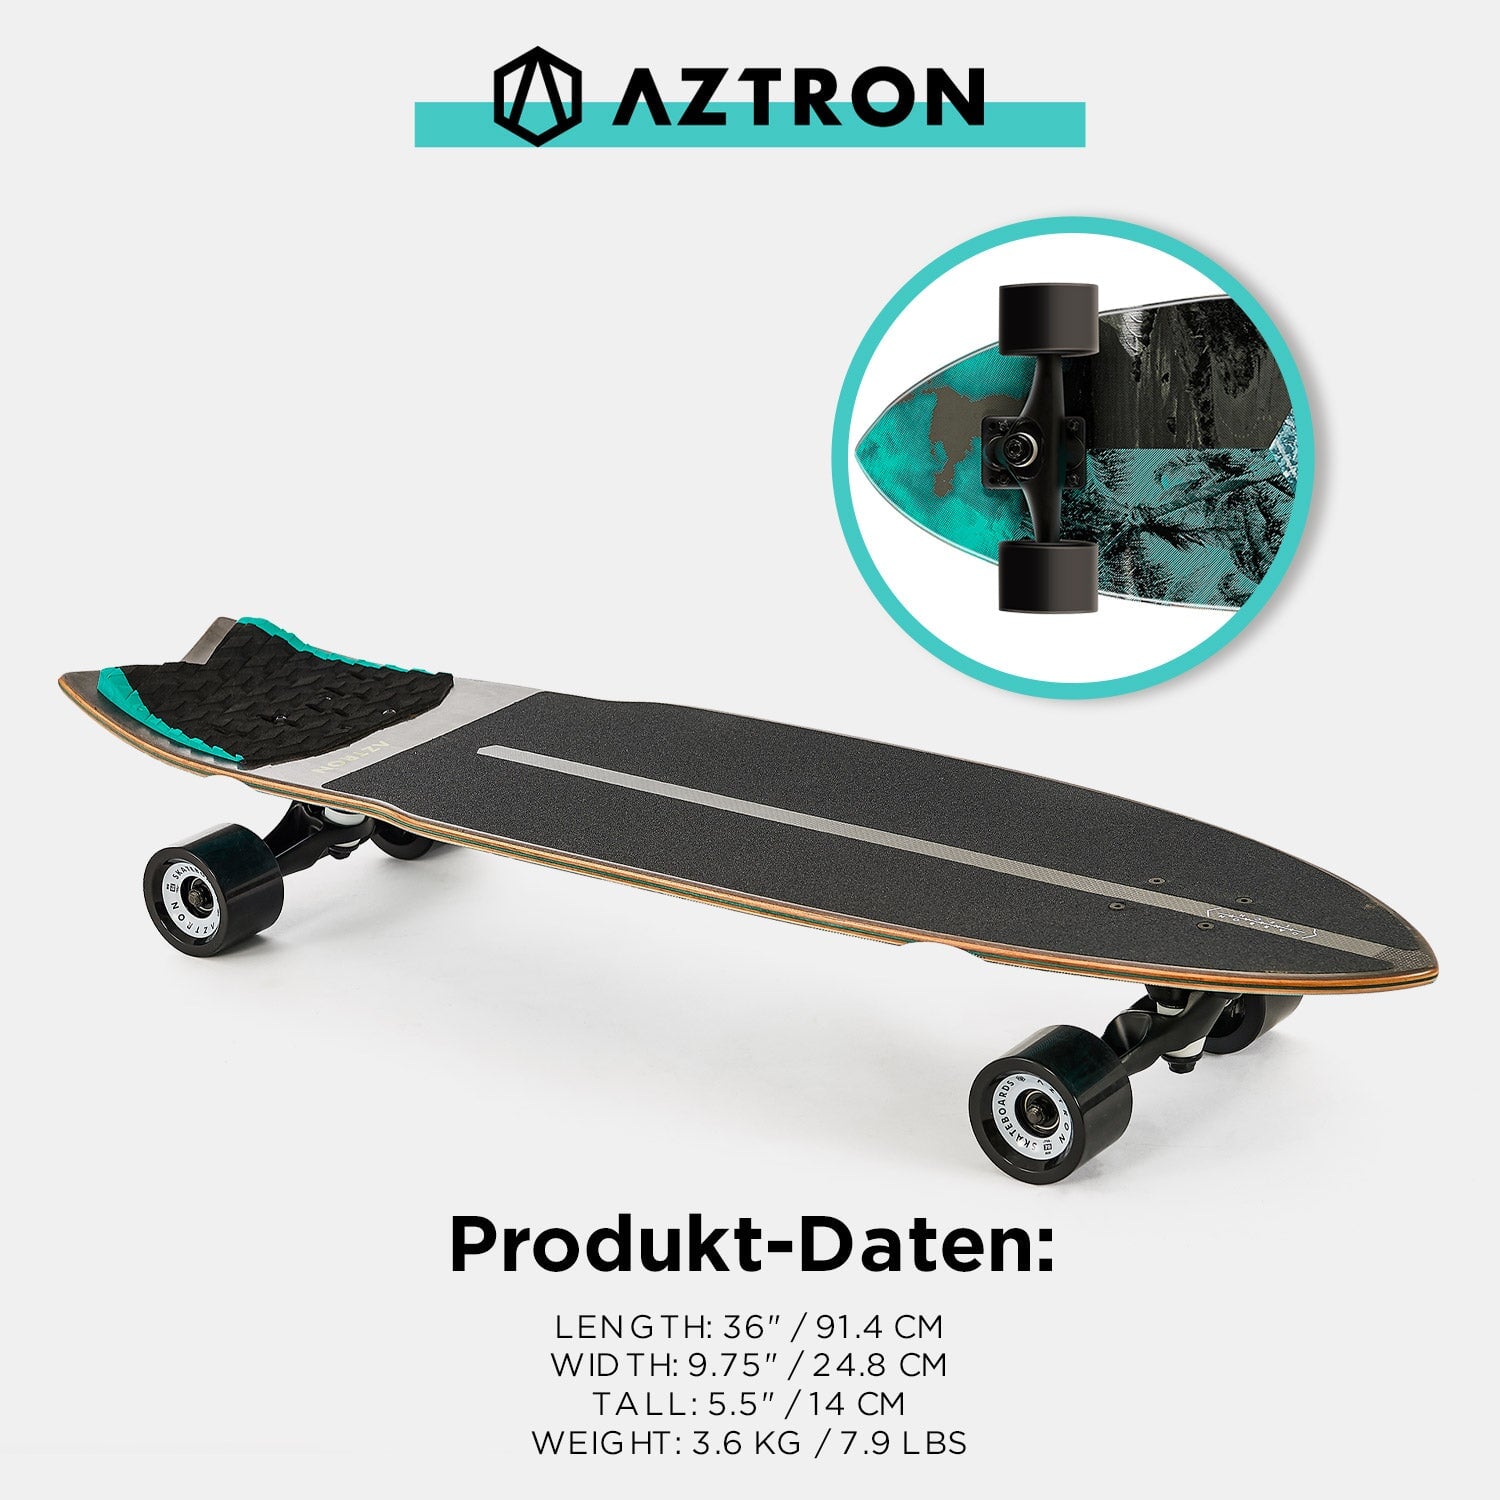 Aztron OCEAN 36 Surfskate Board